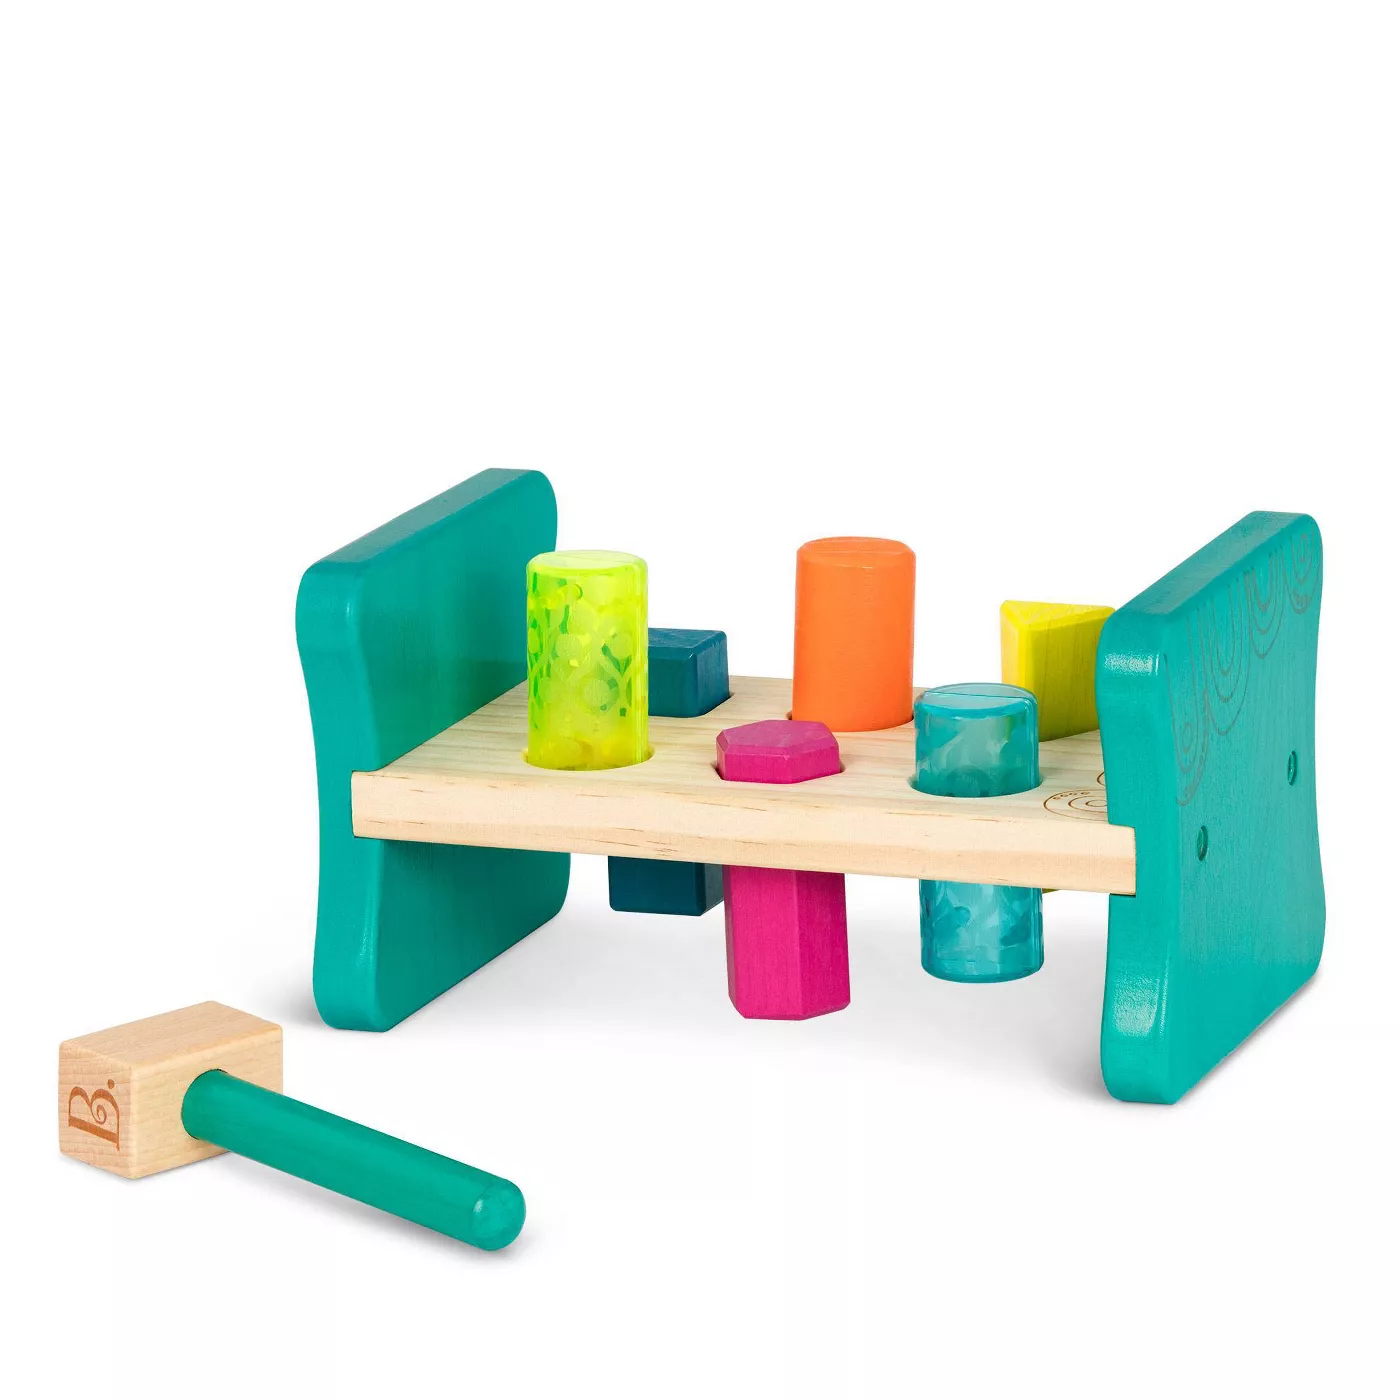 B. Toys Wooden Shape Sorter Hammering Bench - image 1 of 3